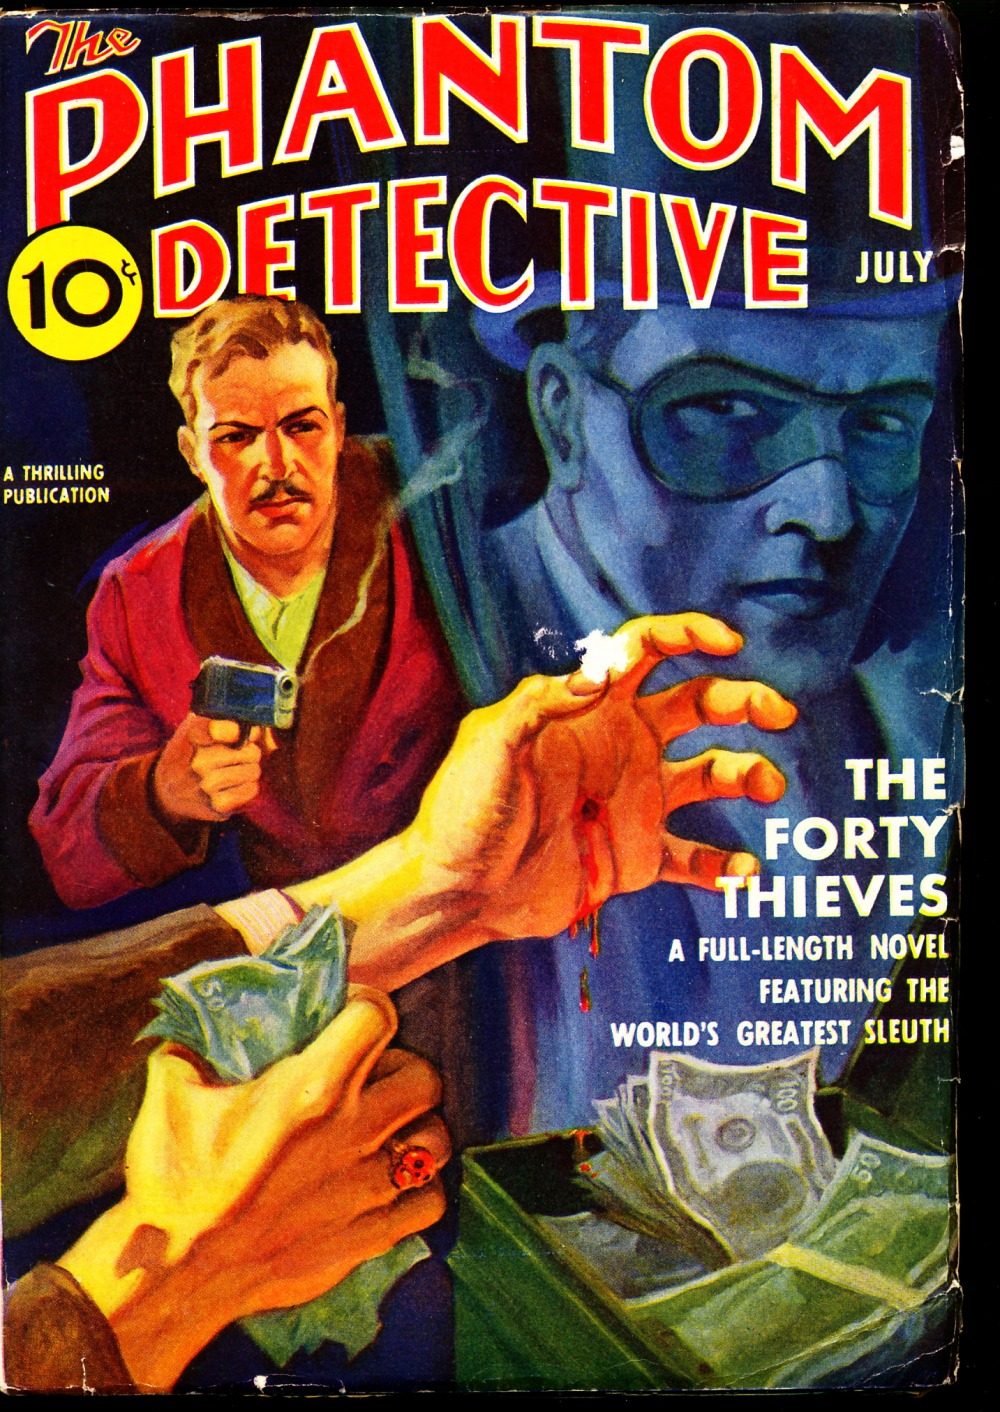 free download phantom detective ds